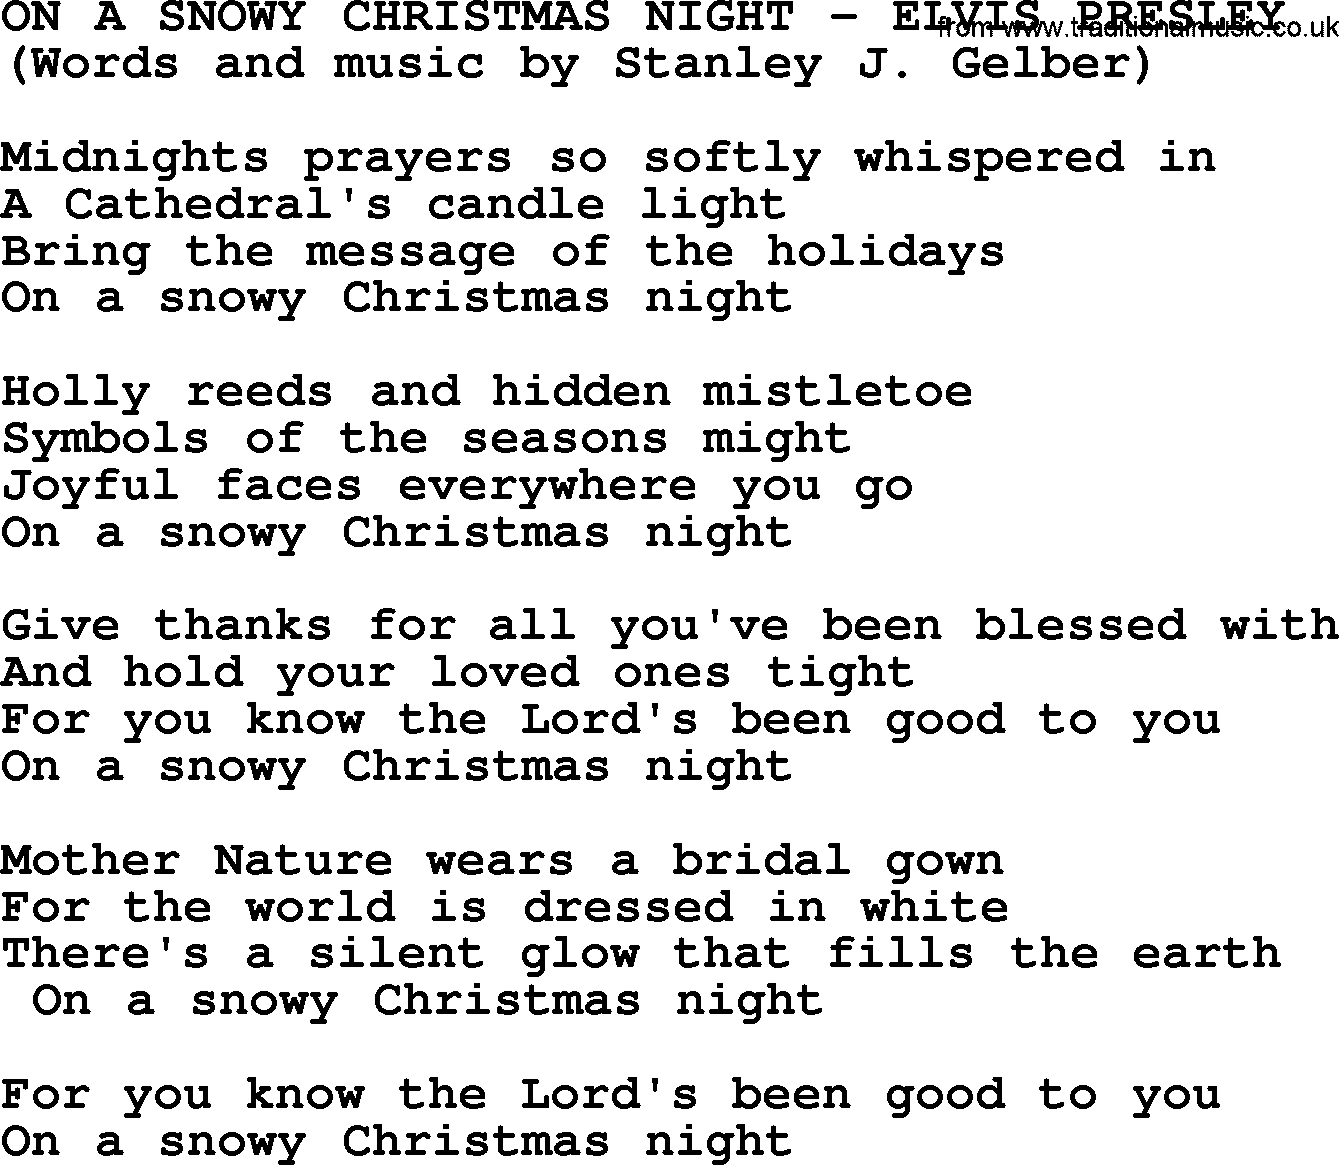 Elvis Presley song: On A Snowy Christmas Night lyrics